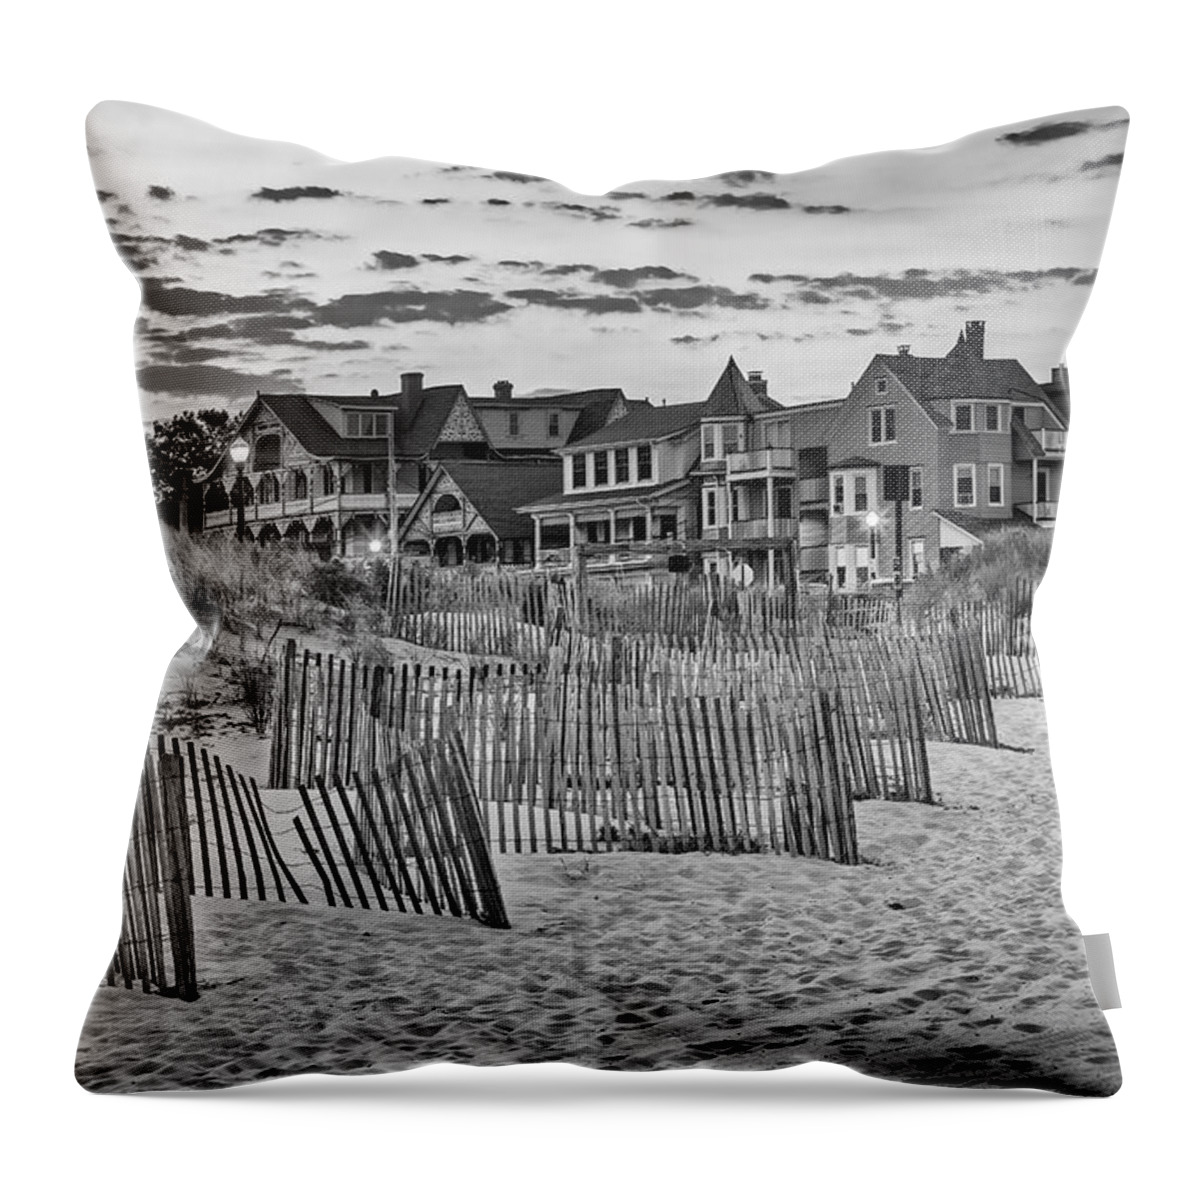 Asbury Park Throw Pillow featuring the photograph Ocean Grove Asbury Park NJ BW by Susan Candelario